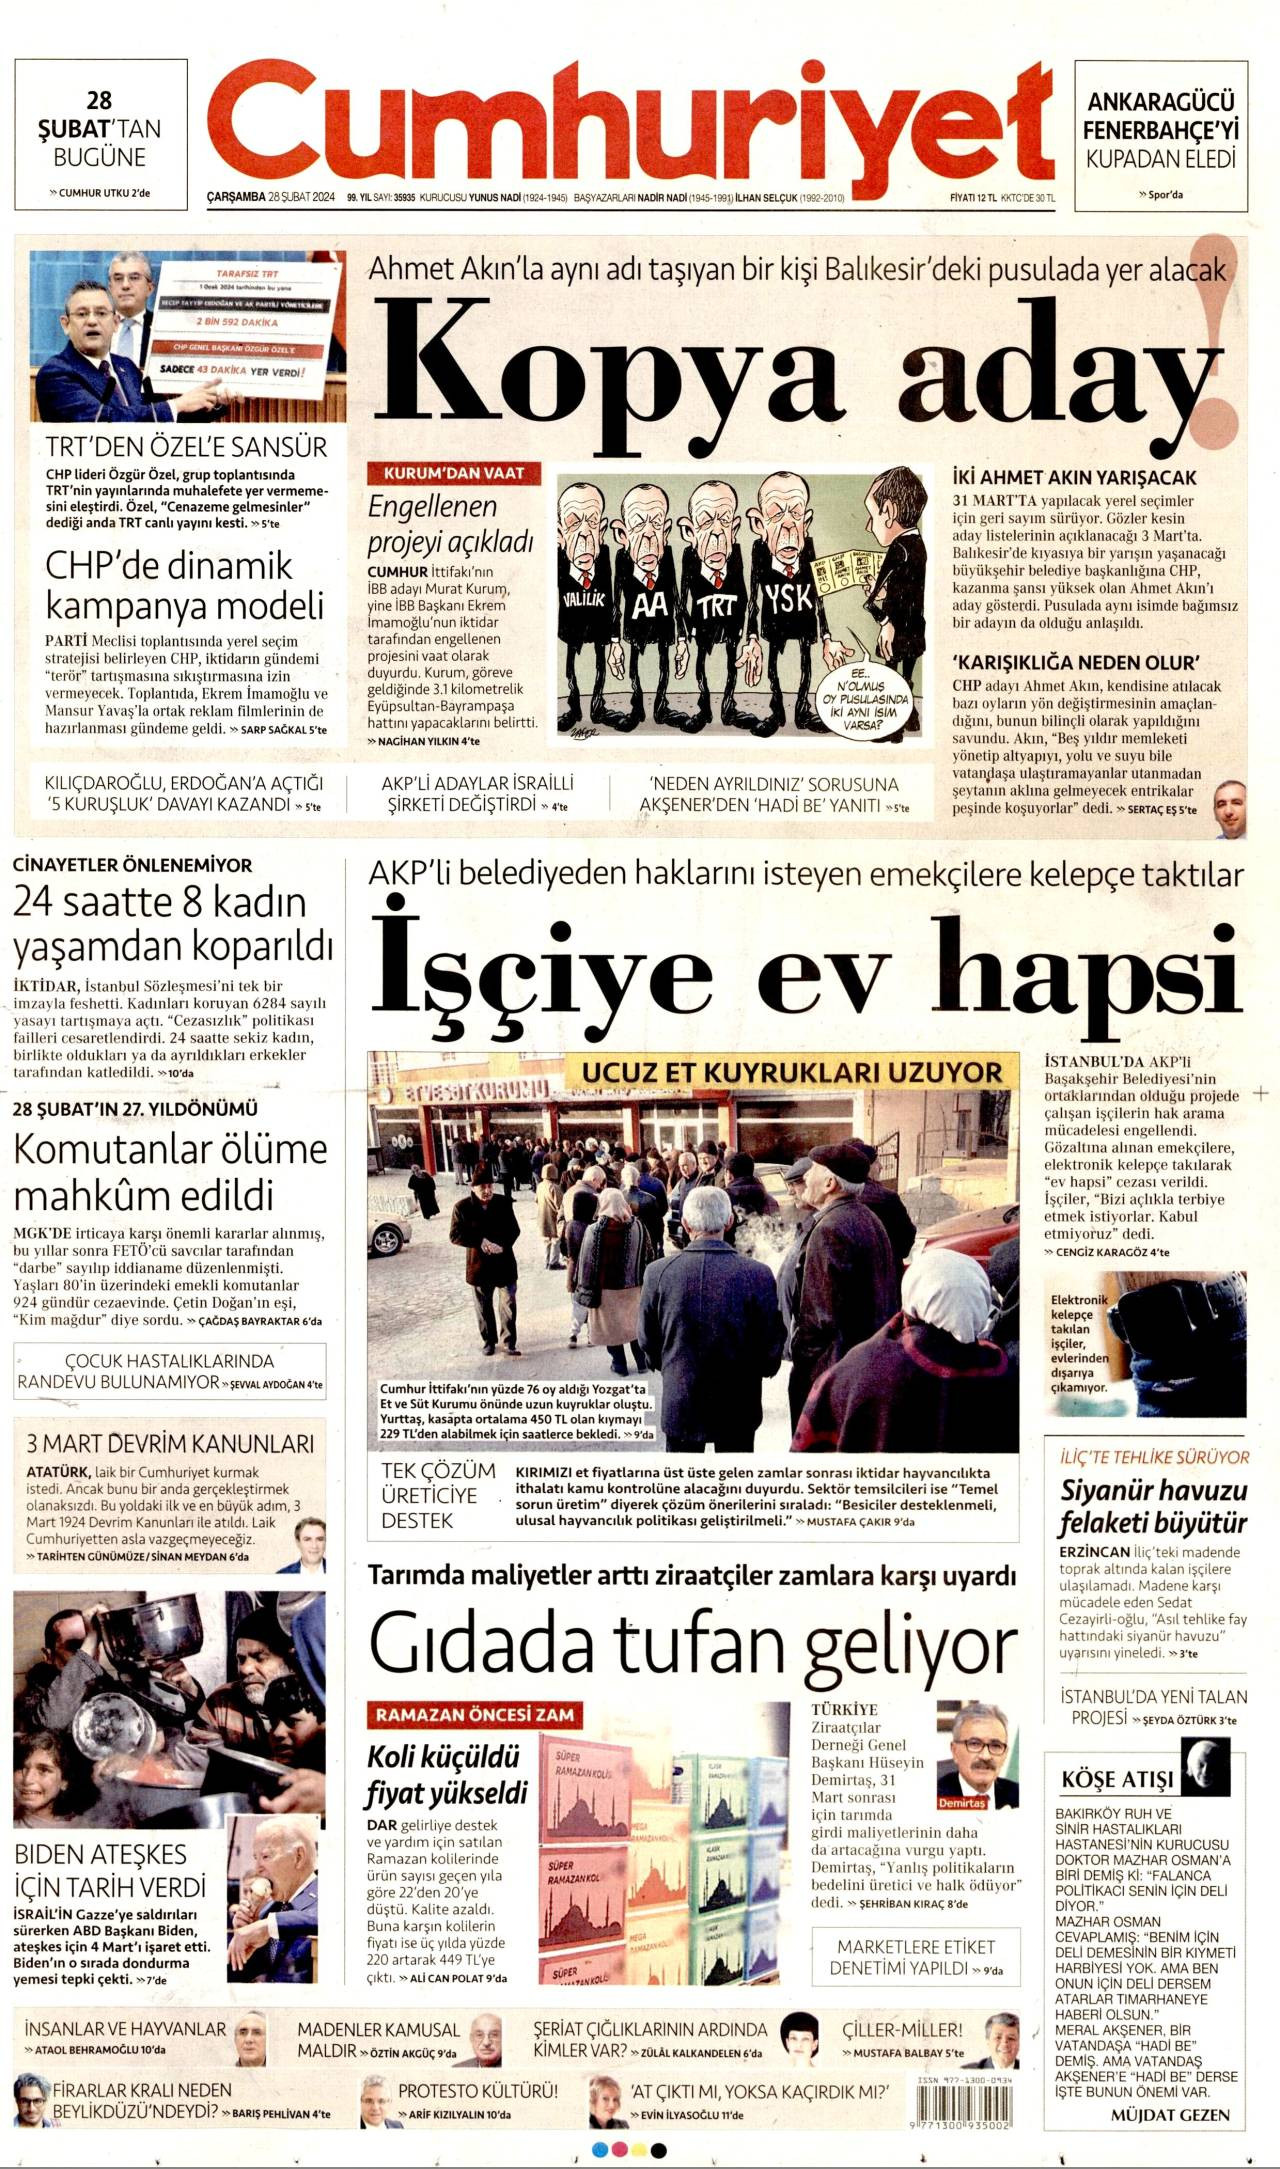 Cumhuriyet gazetesi manşet ilk sayfa oku